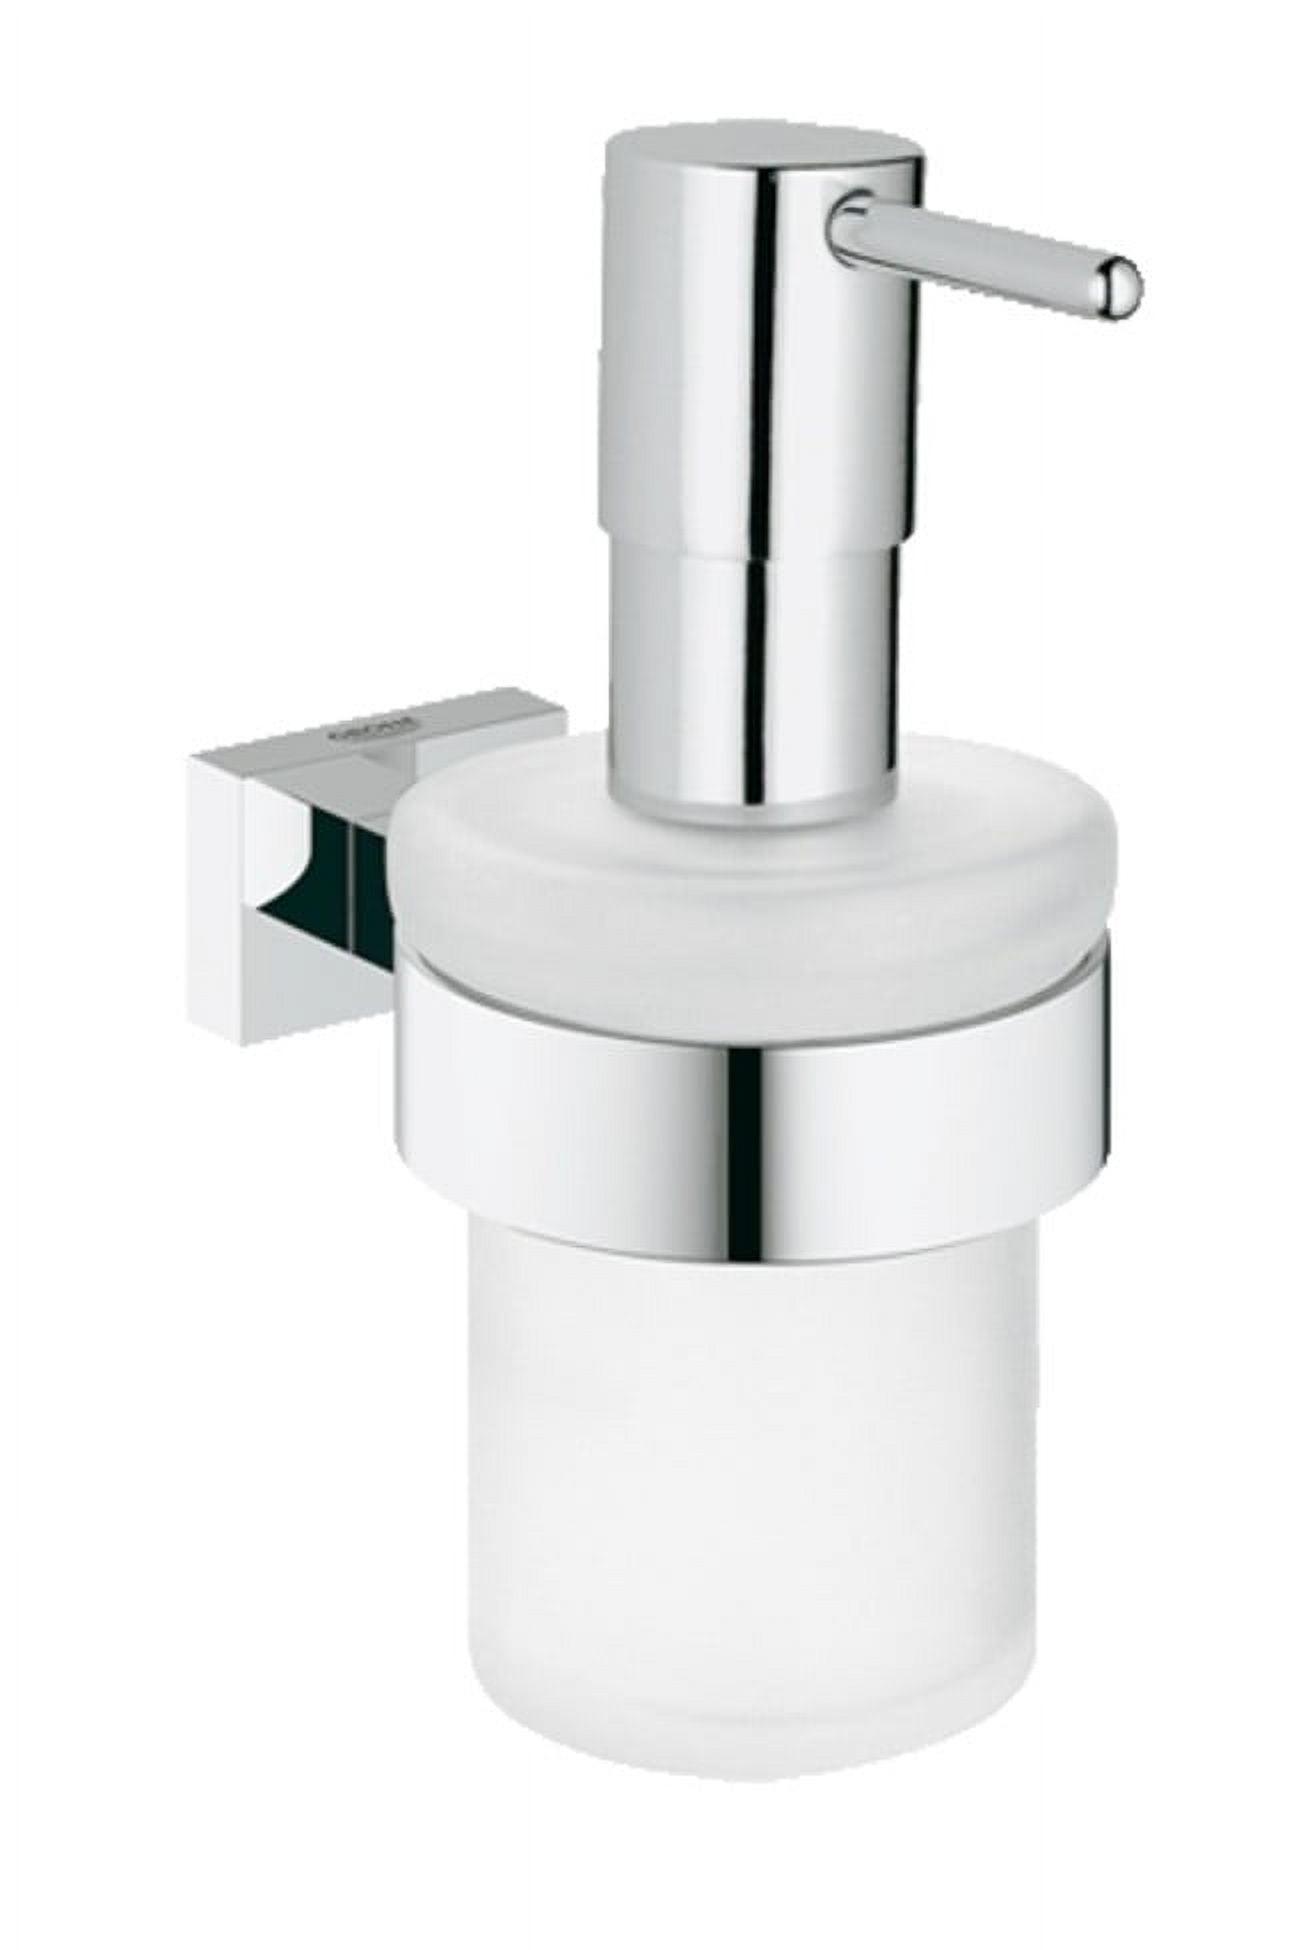 Essentials Cube Modern Chrome Wall-Mounted Soap Dispenser